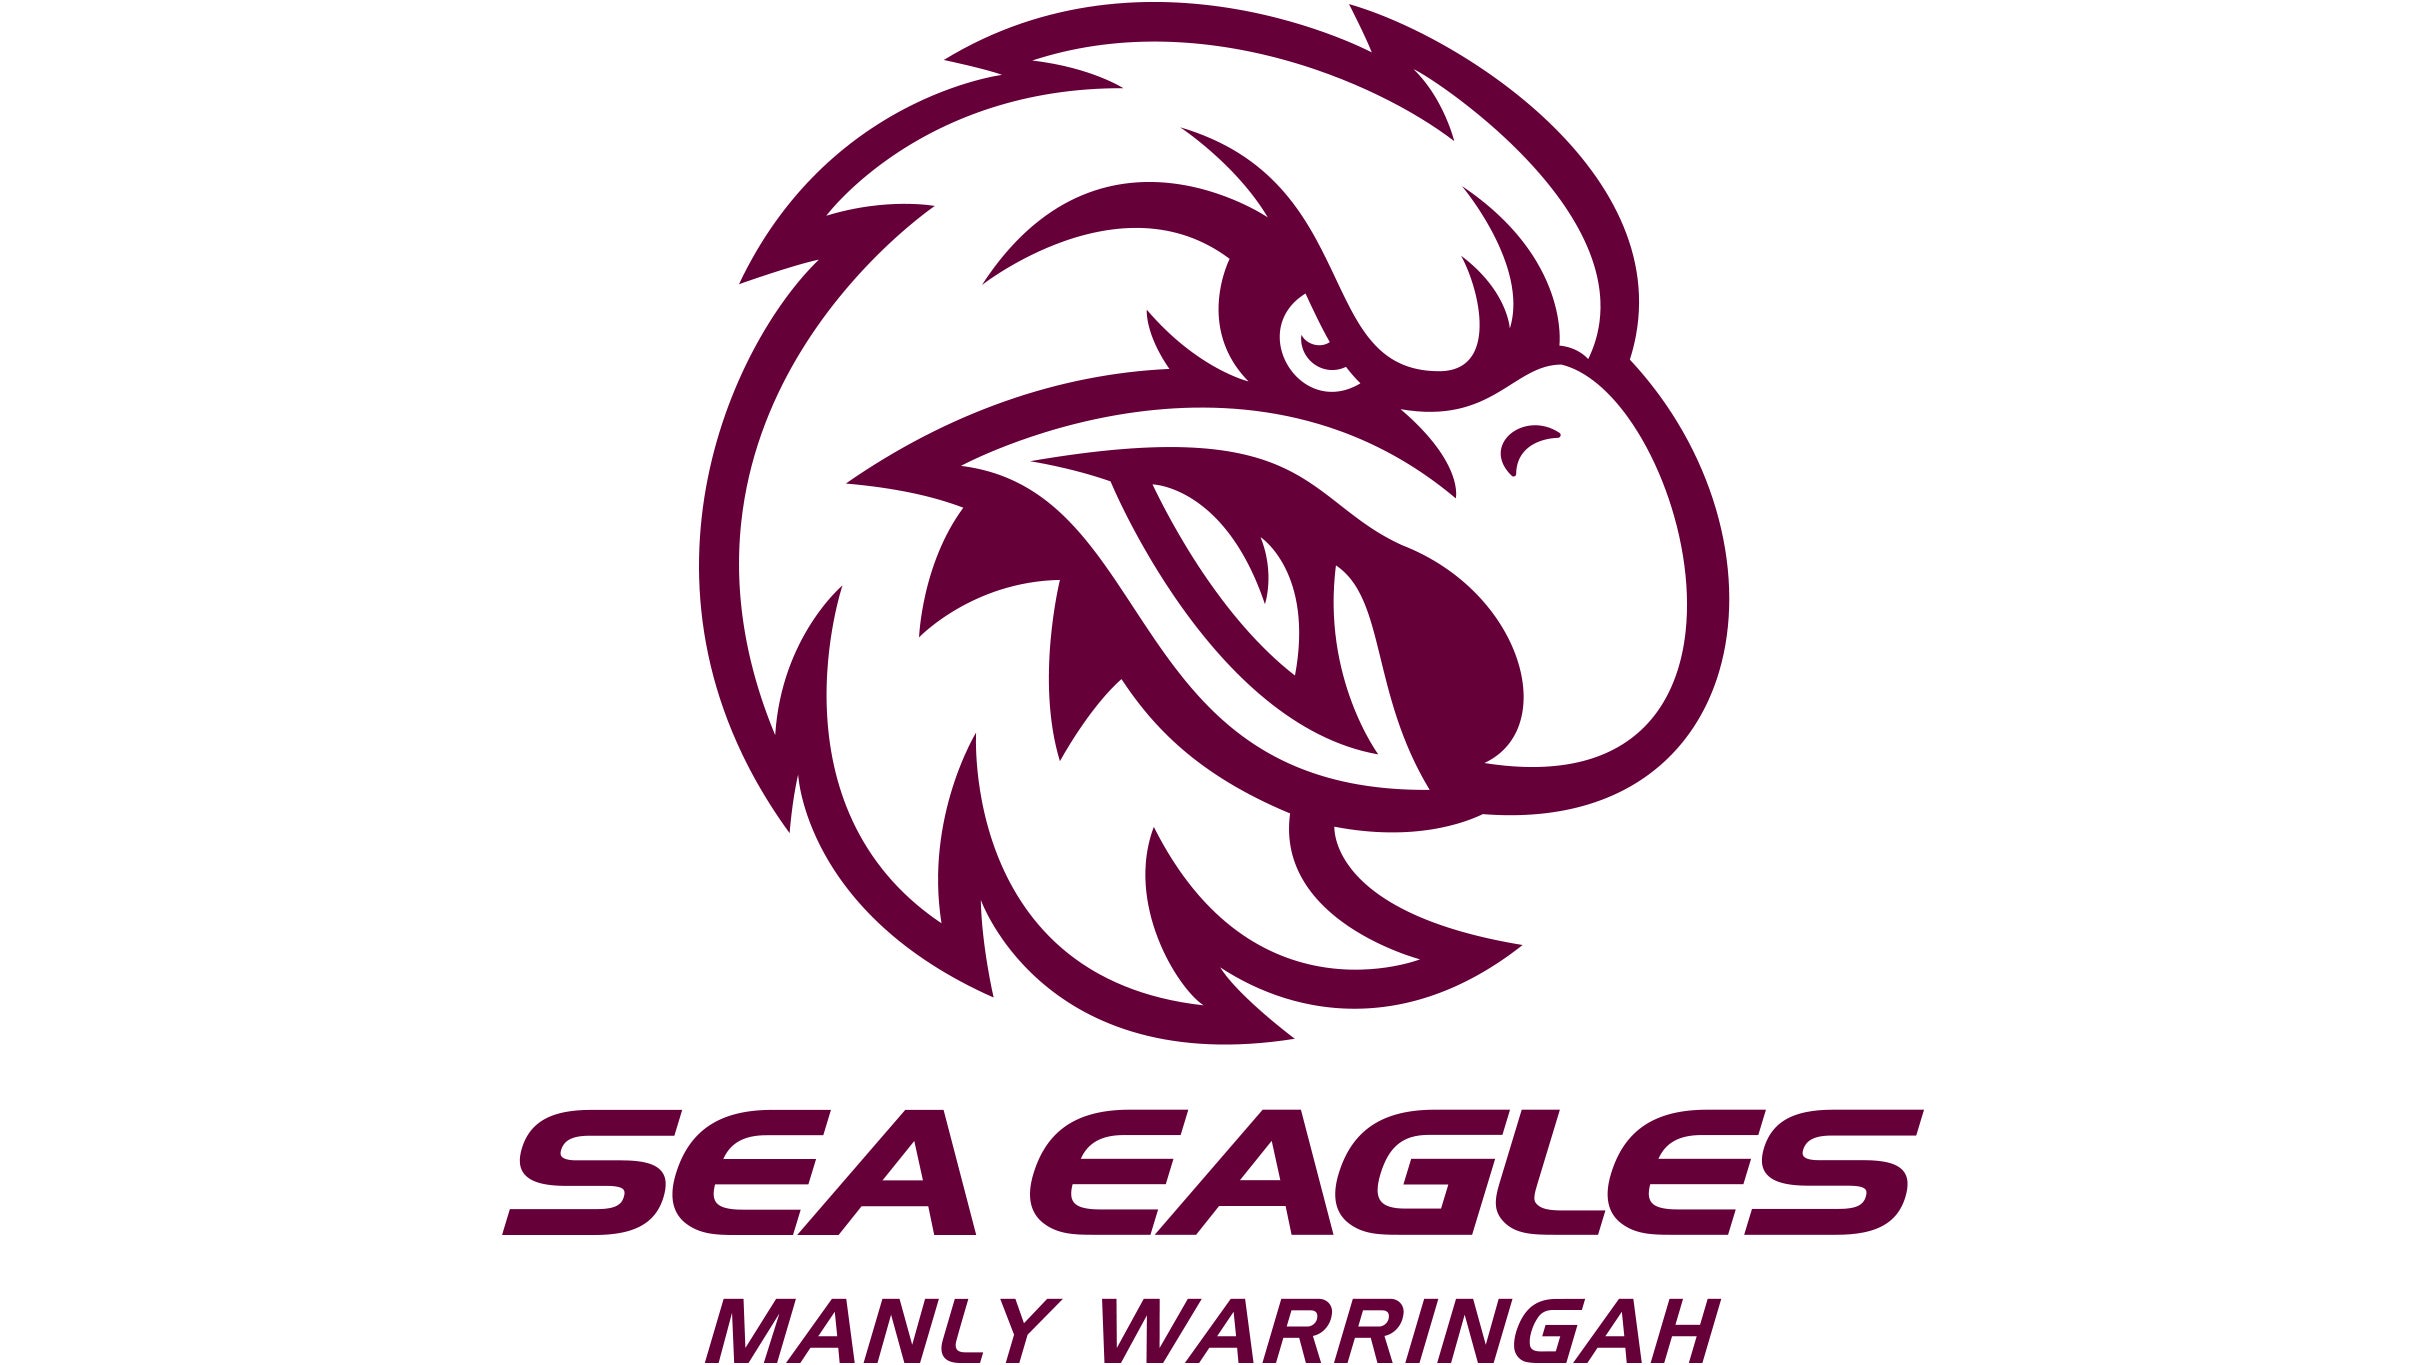 Manly Warringah Sea Eagles v Dragons in Brookvale promo photo for Sea Eagles Members presale offer code